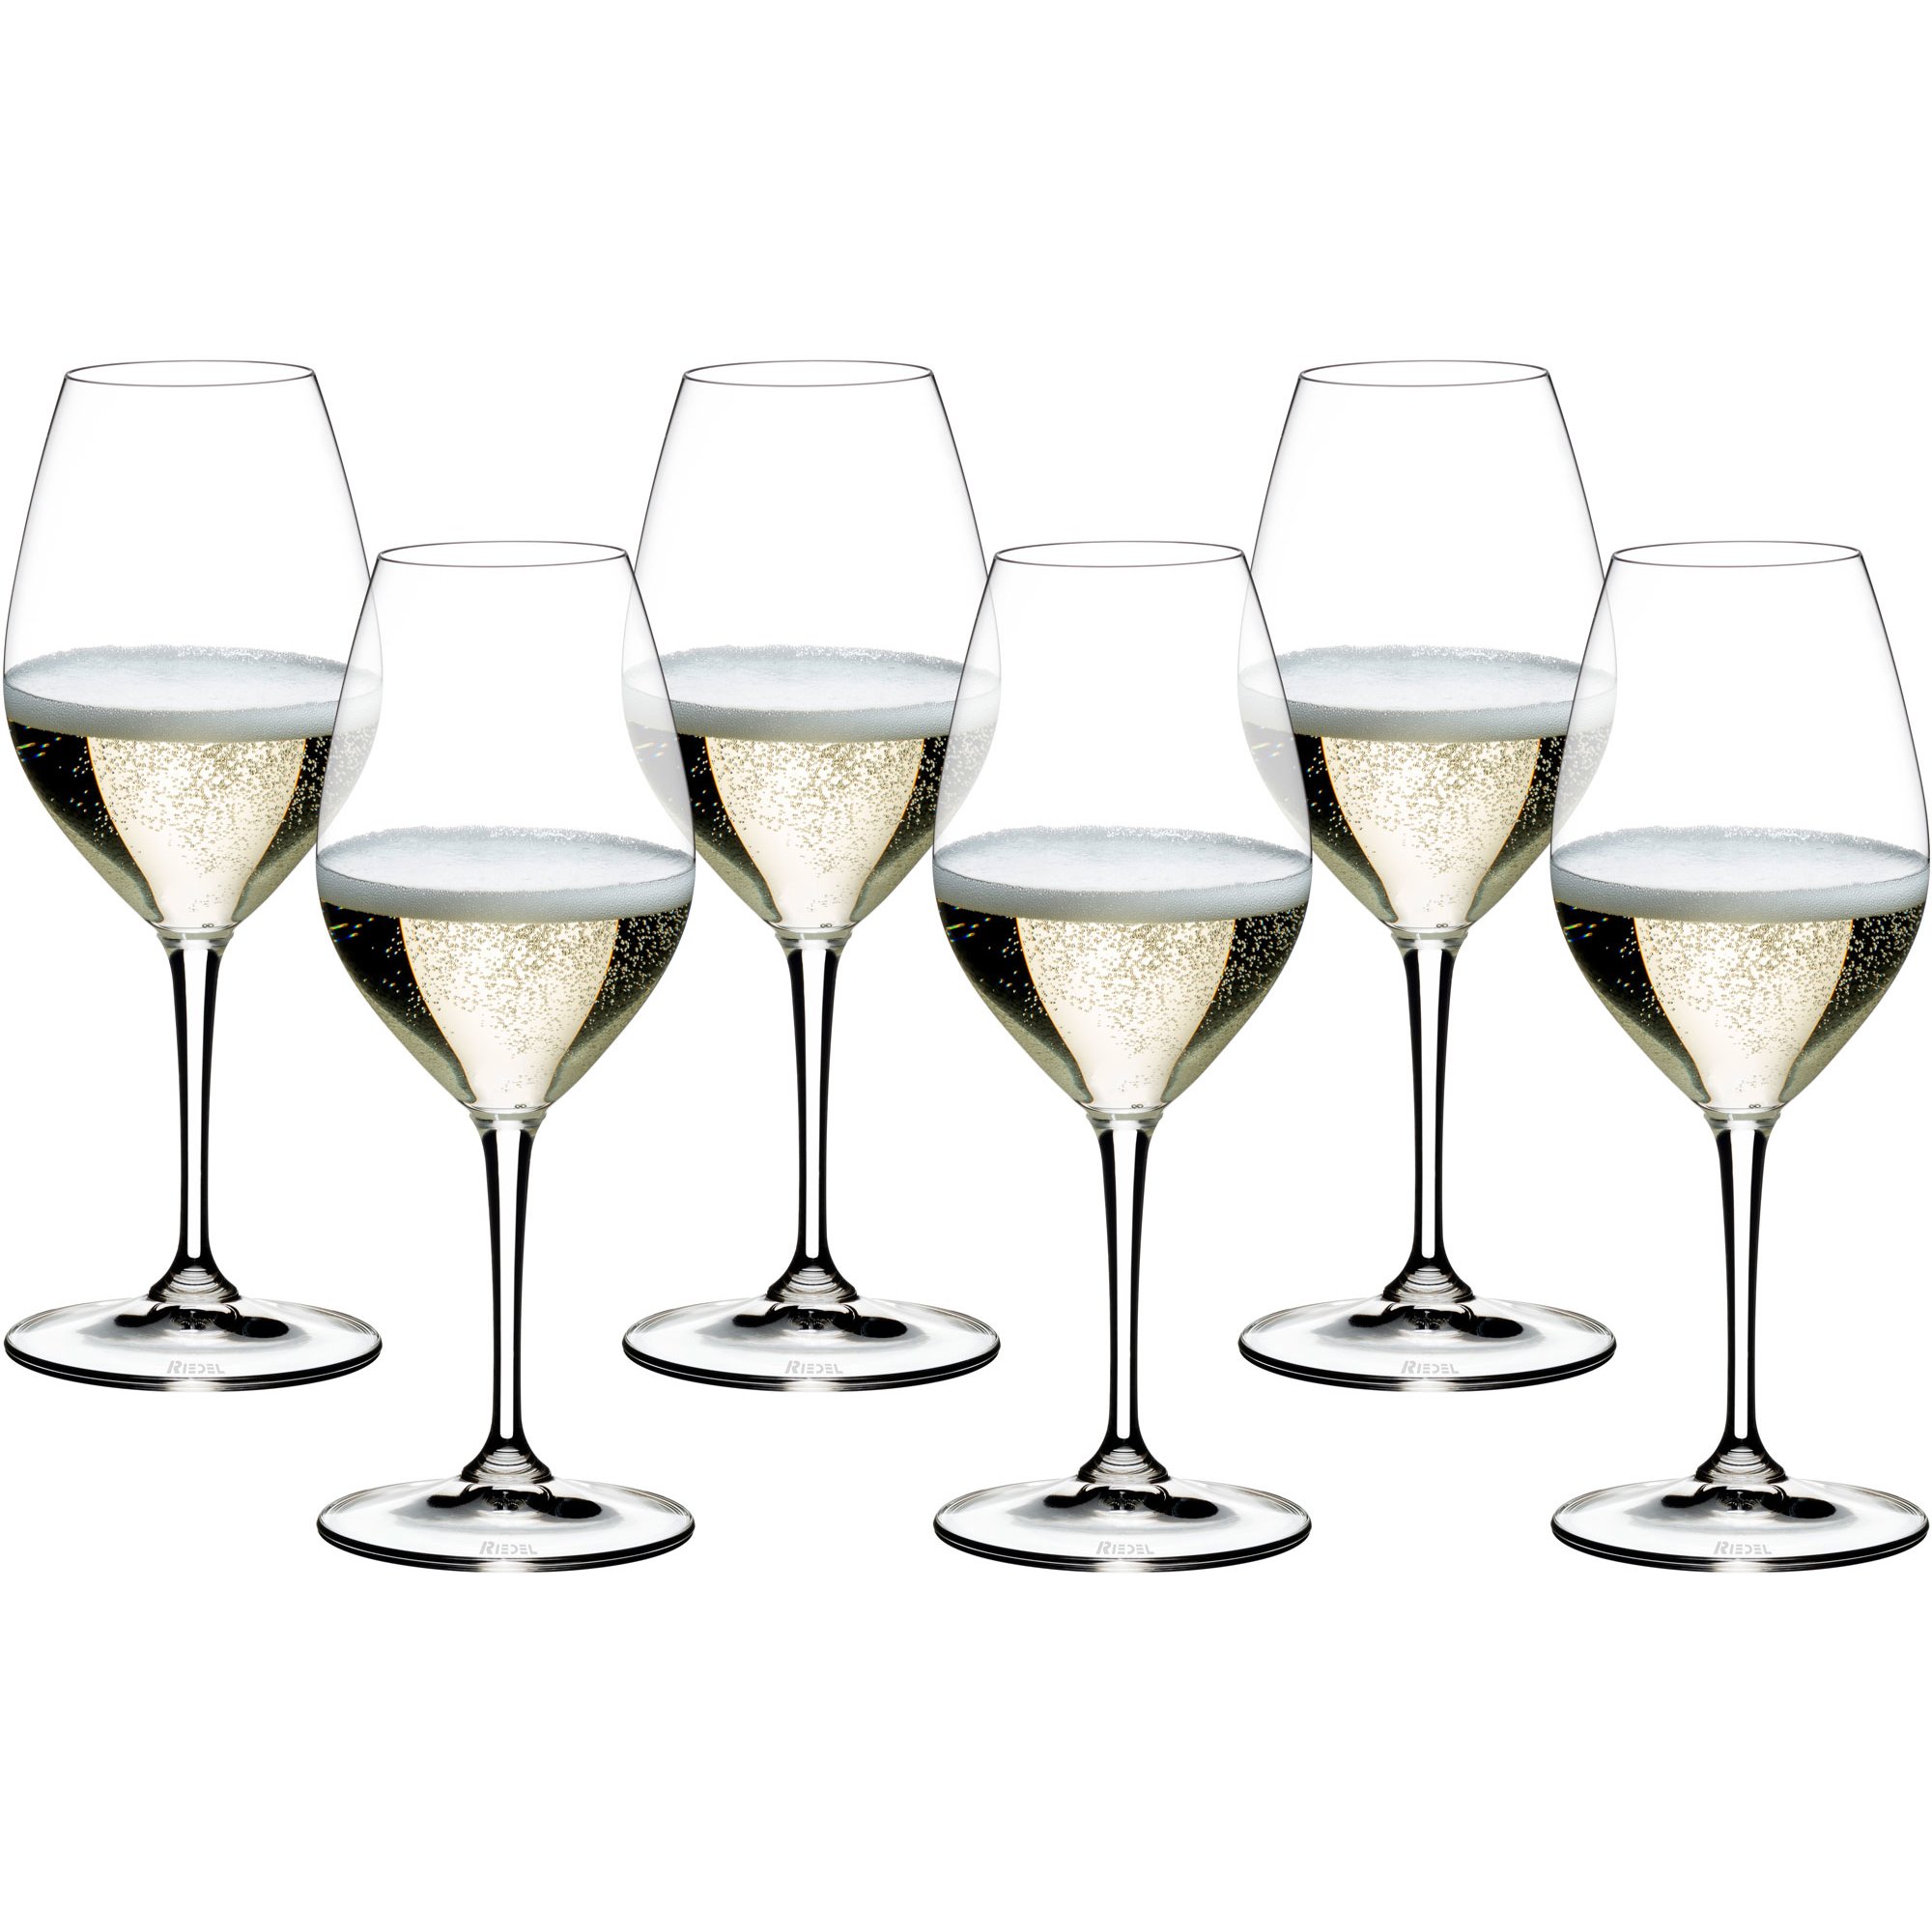 Riedel Vinum Champagneglas 6-pack, 265-årsjubileum